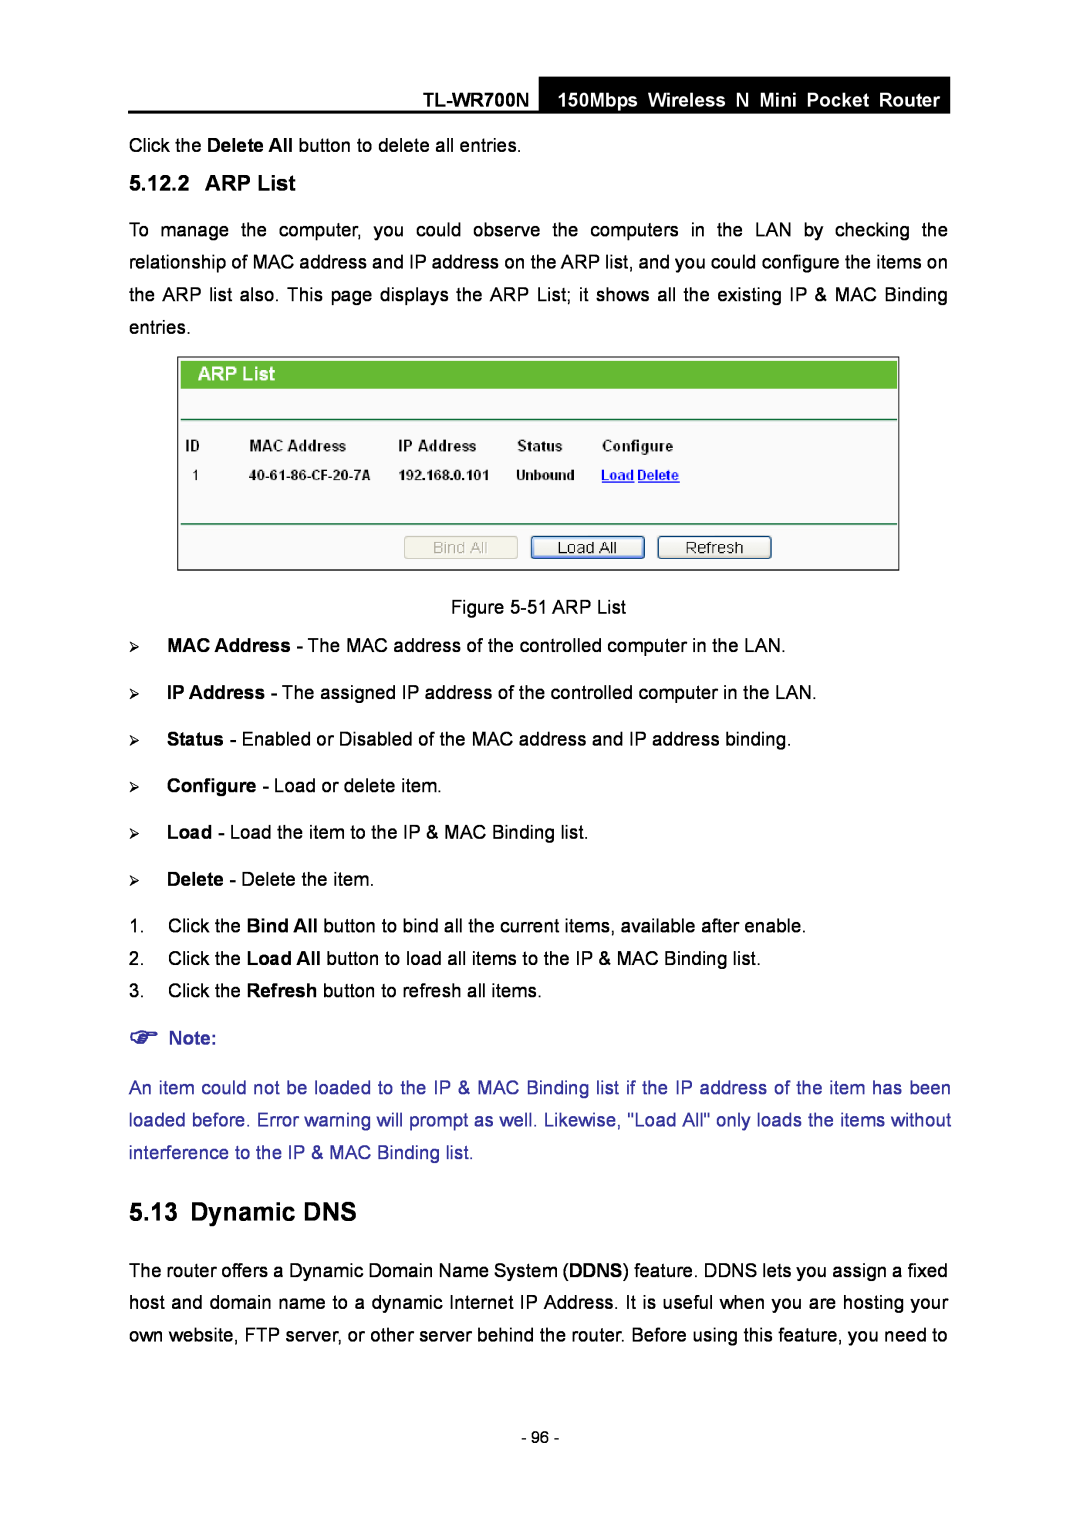 TP-Link manual Dynamic DNS, ARP List, TL-WR700N 150Mbps Wireless N Mini Pocket Router 